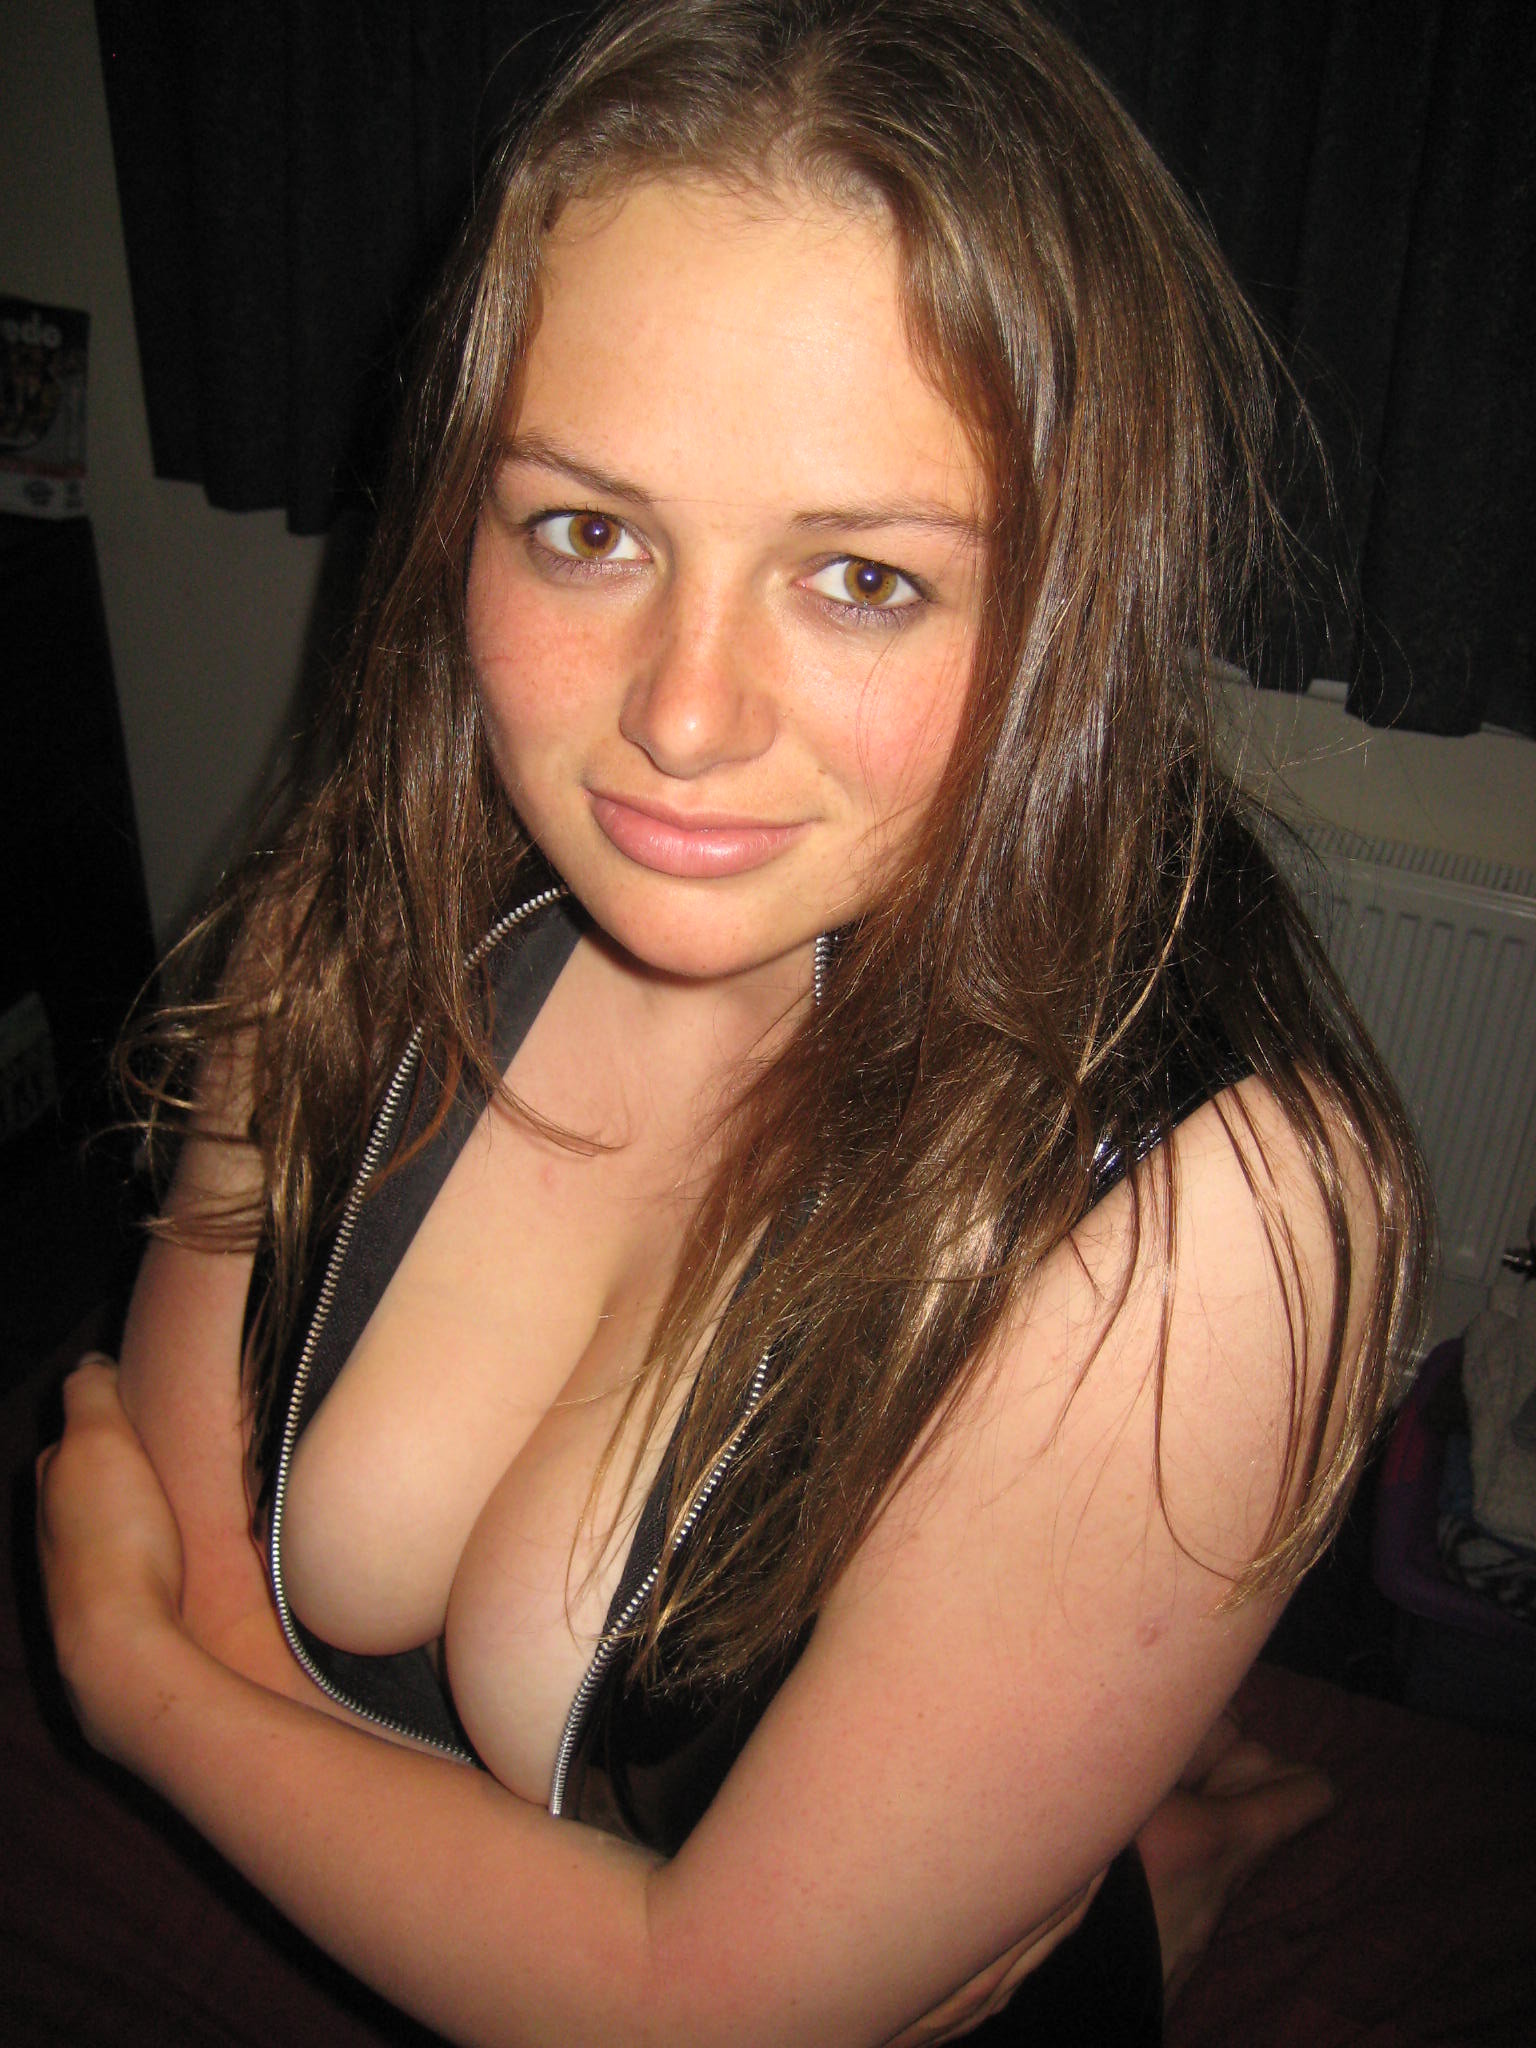 Amateur Brunette Girlfriend with Big Tits Wearing PVC Dress